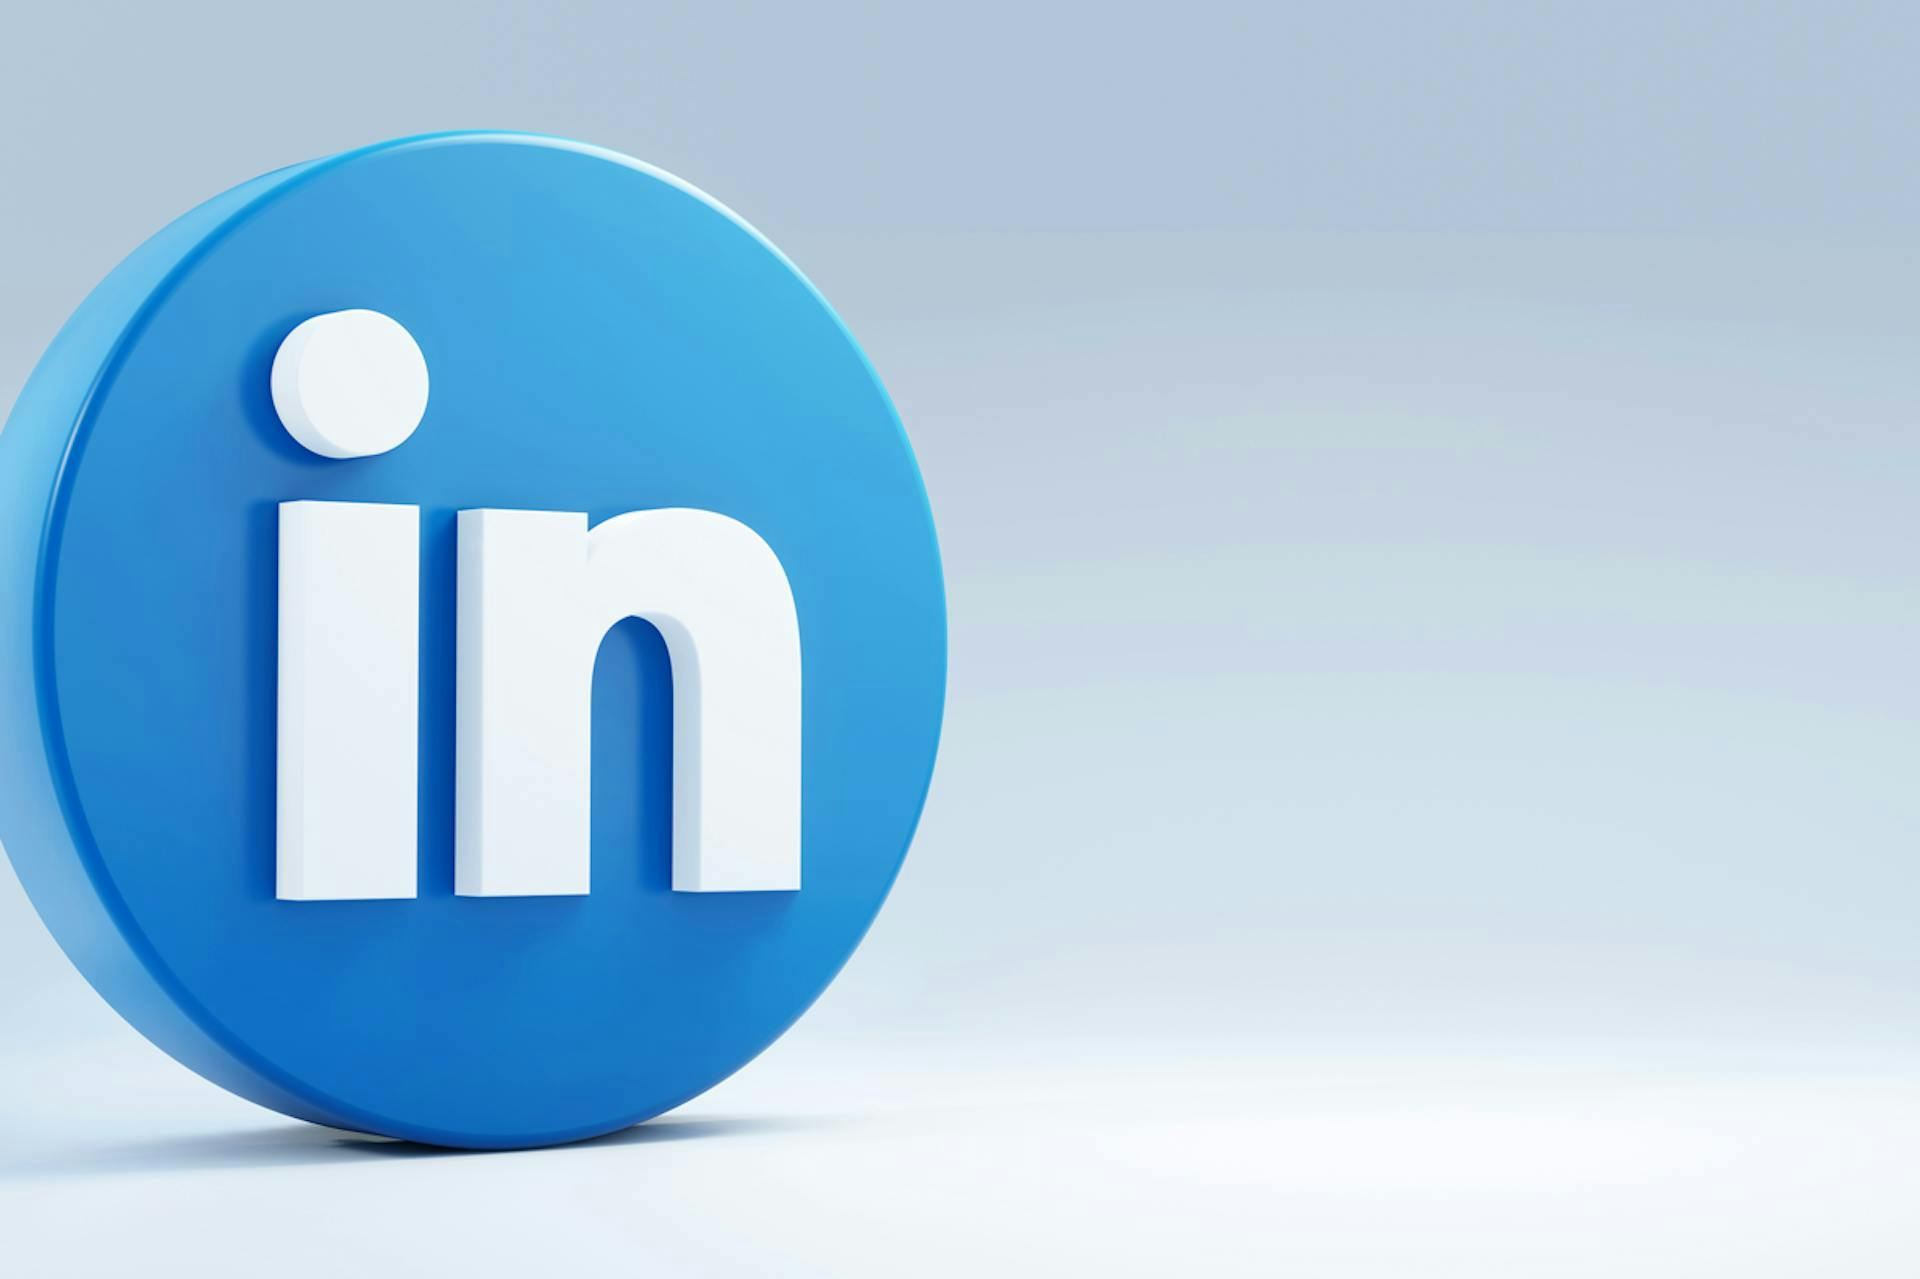 LinkedIn Logo Image